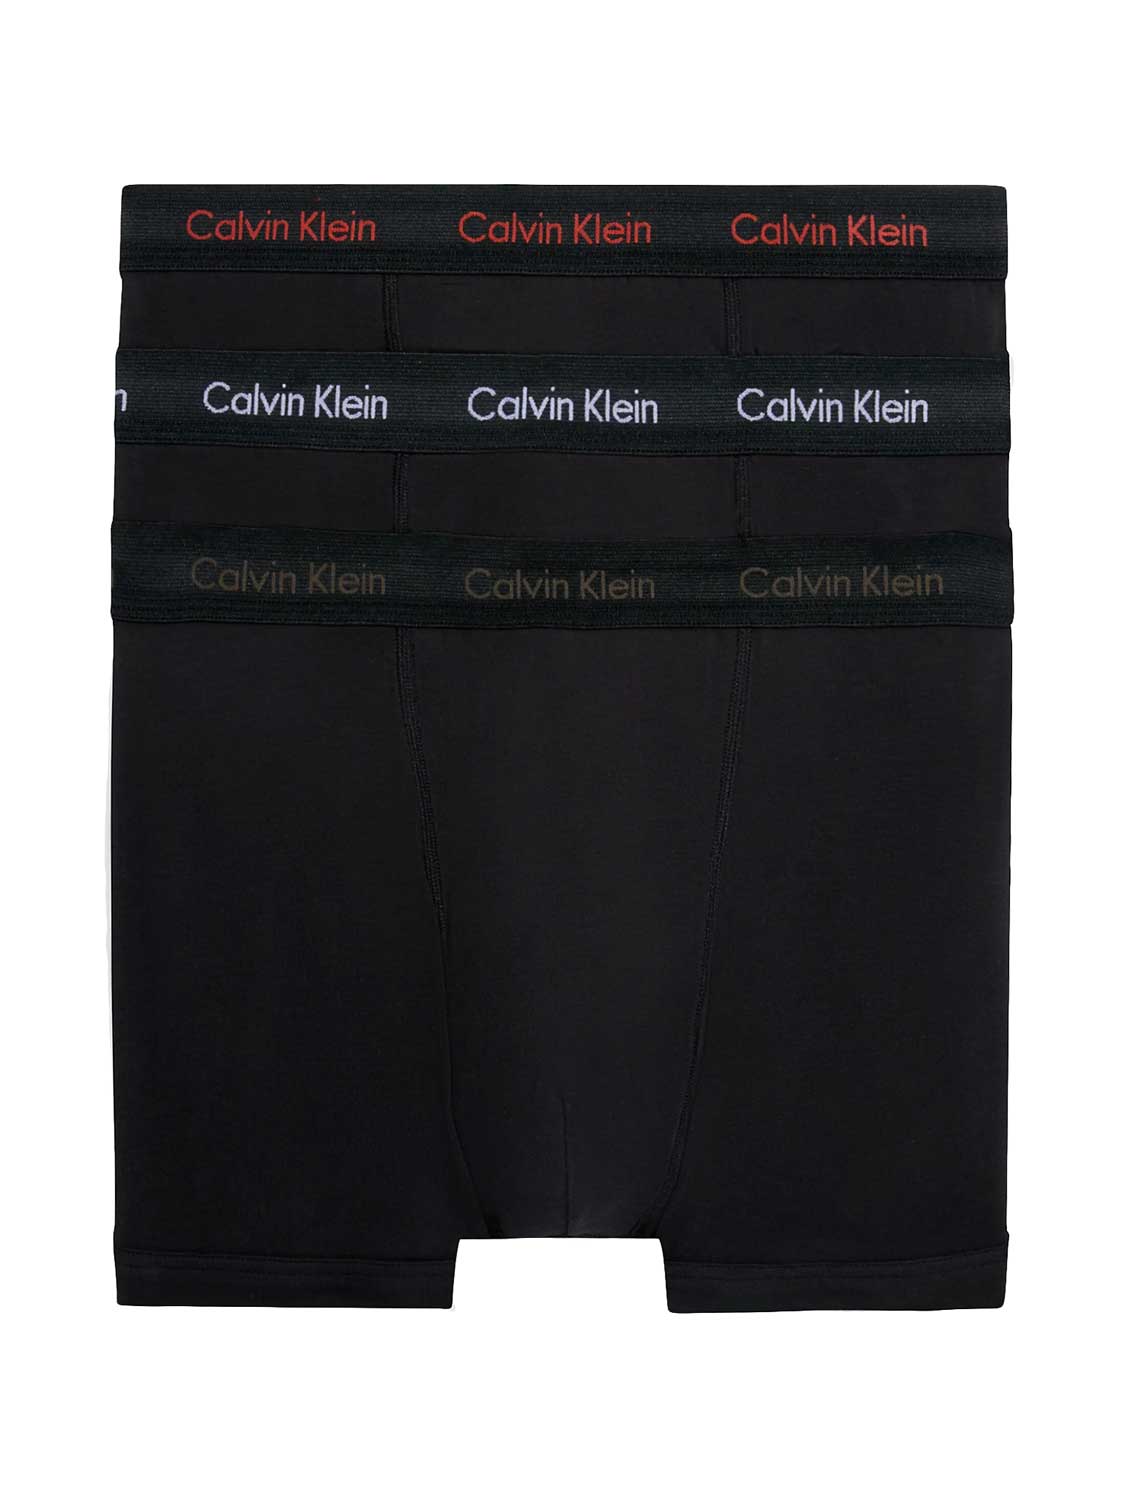 Calvin Klein heren boxers normale lengte (3-pack) - zwart met logo tailleband - Maat: L